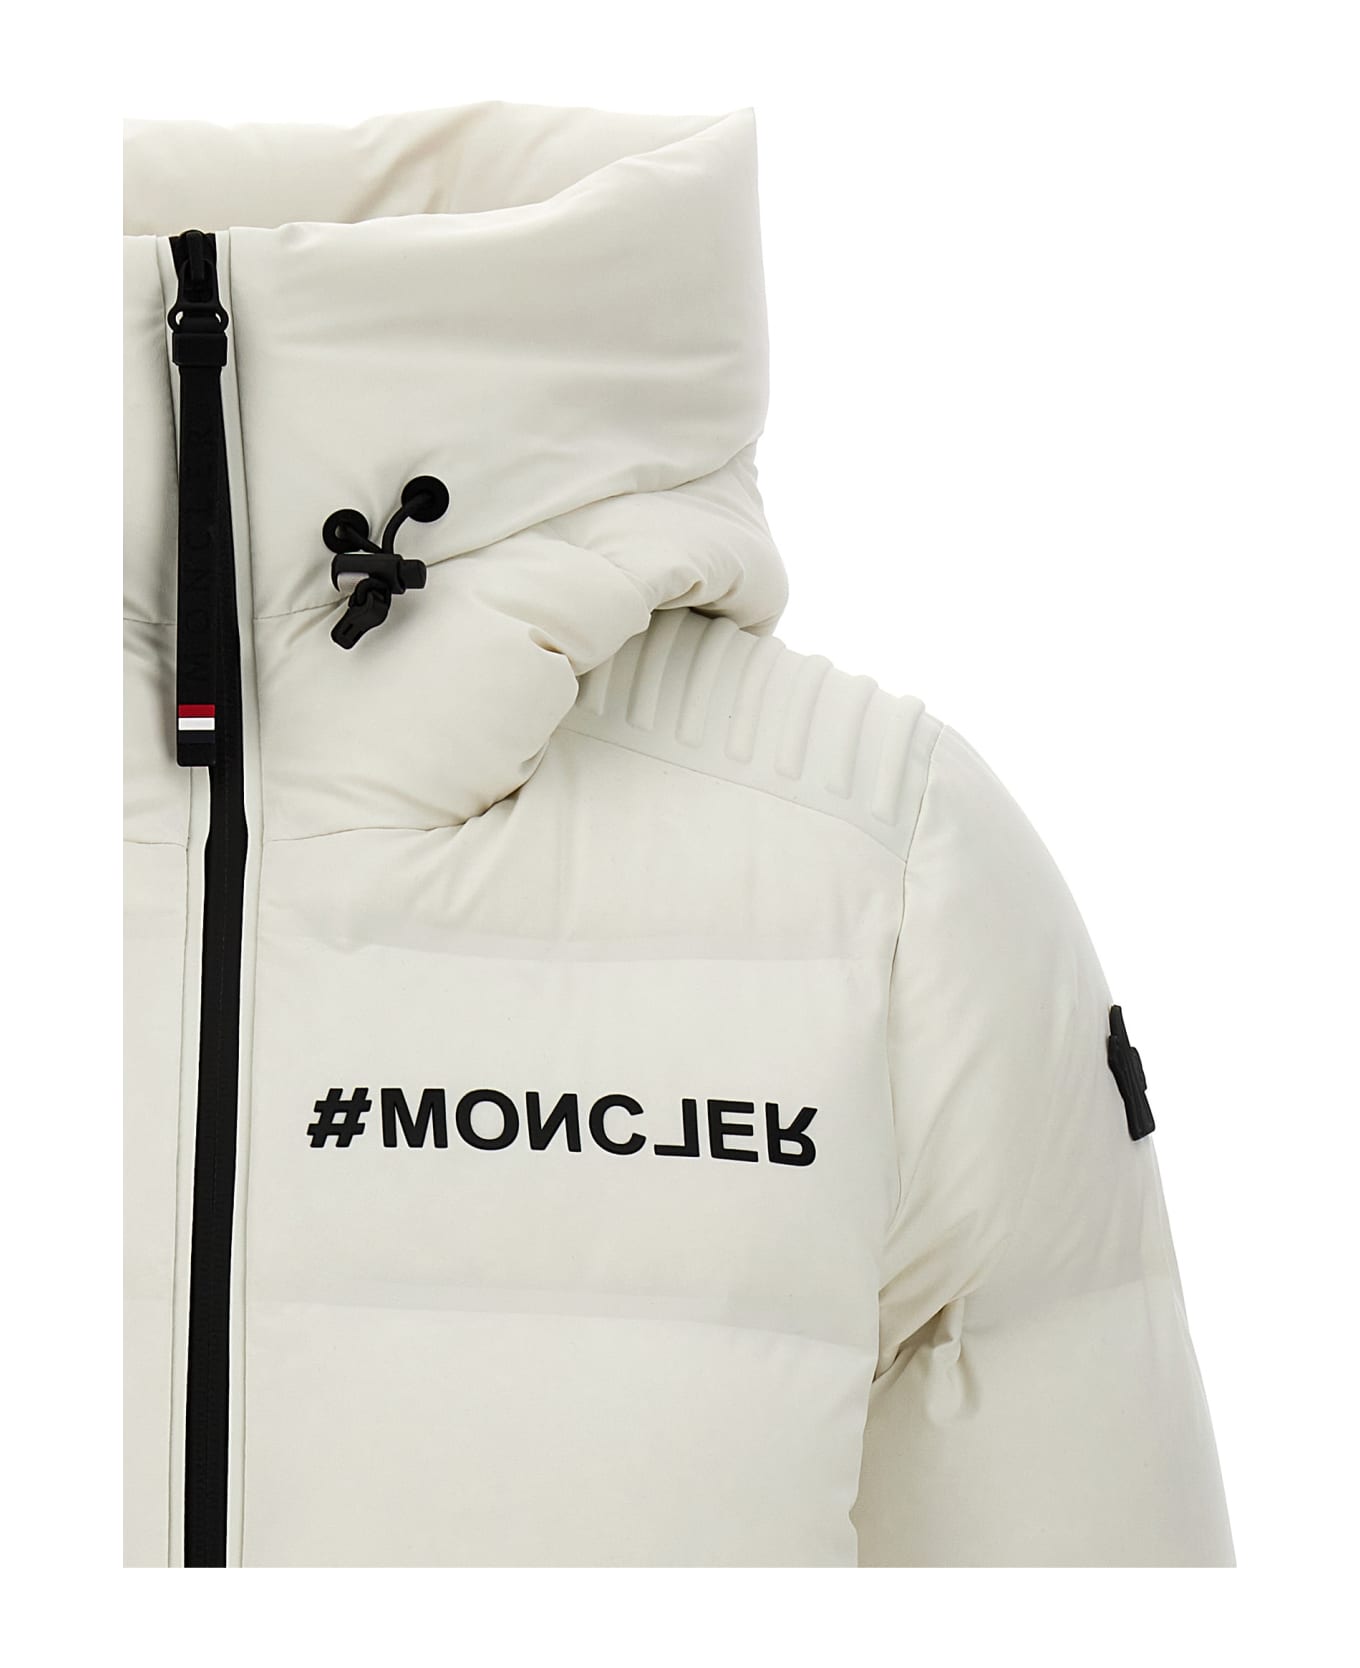 Moncler Grenoble 'suisses' Down Jacket - White/Black ダウンジャケット